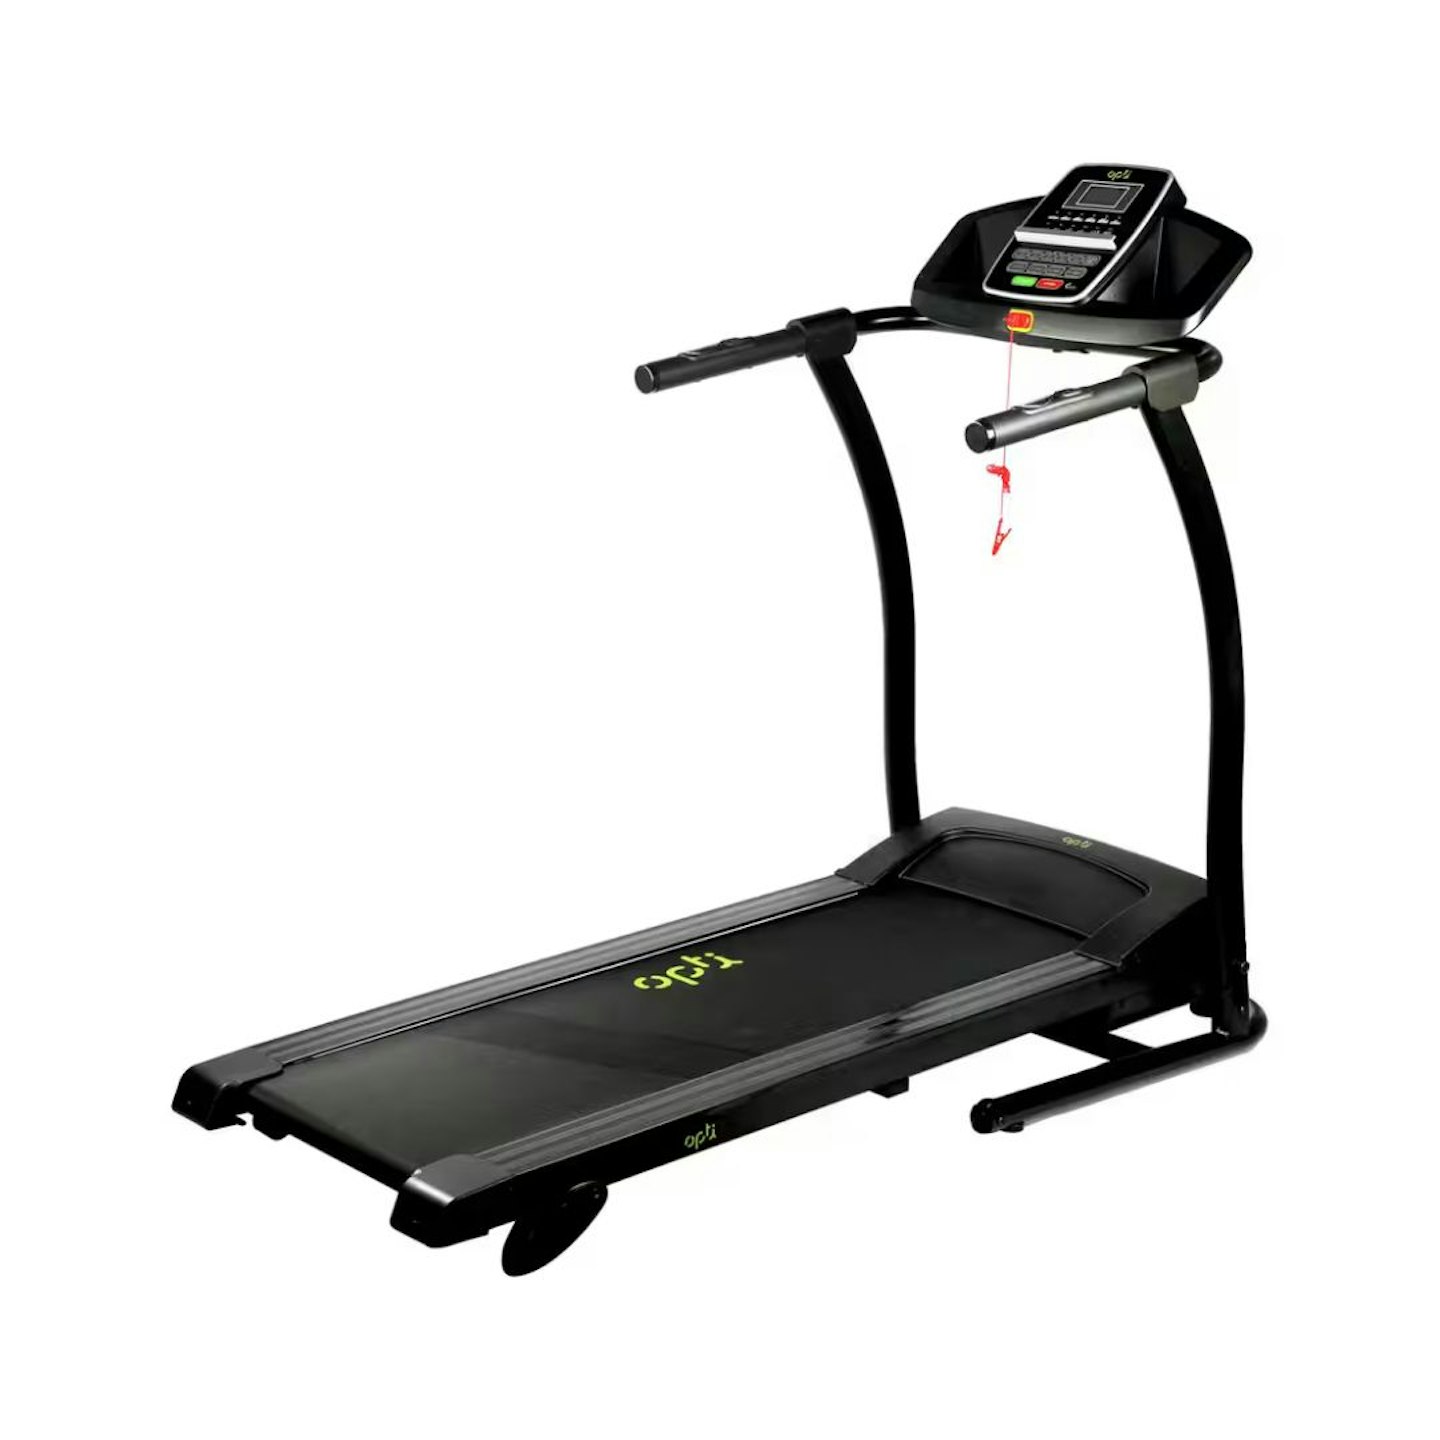 The best Argos deals: Opti Motorised Folding Treadmill with Incline